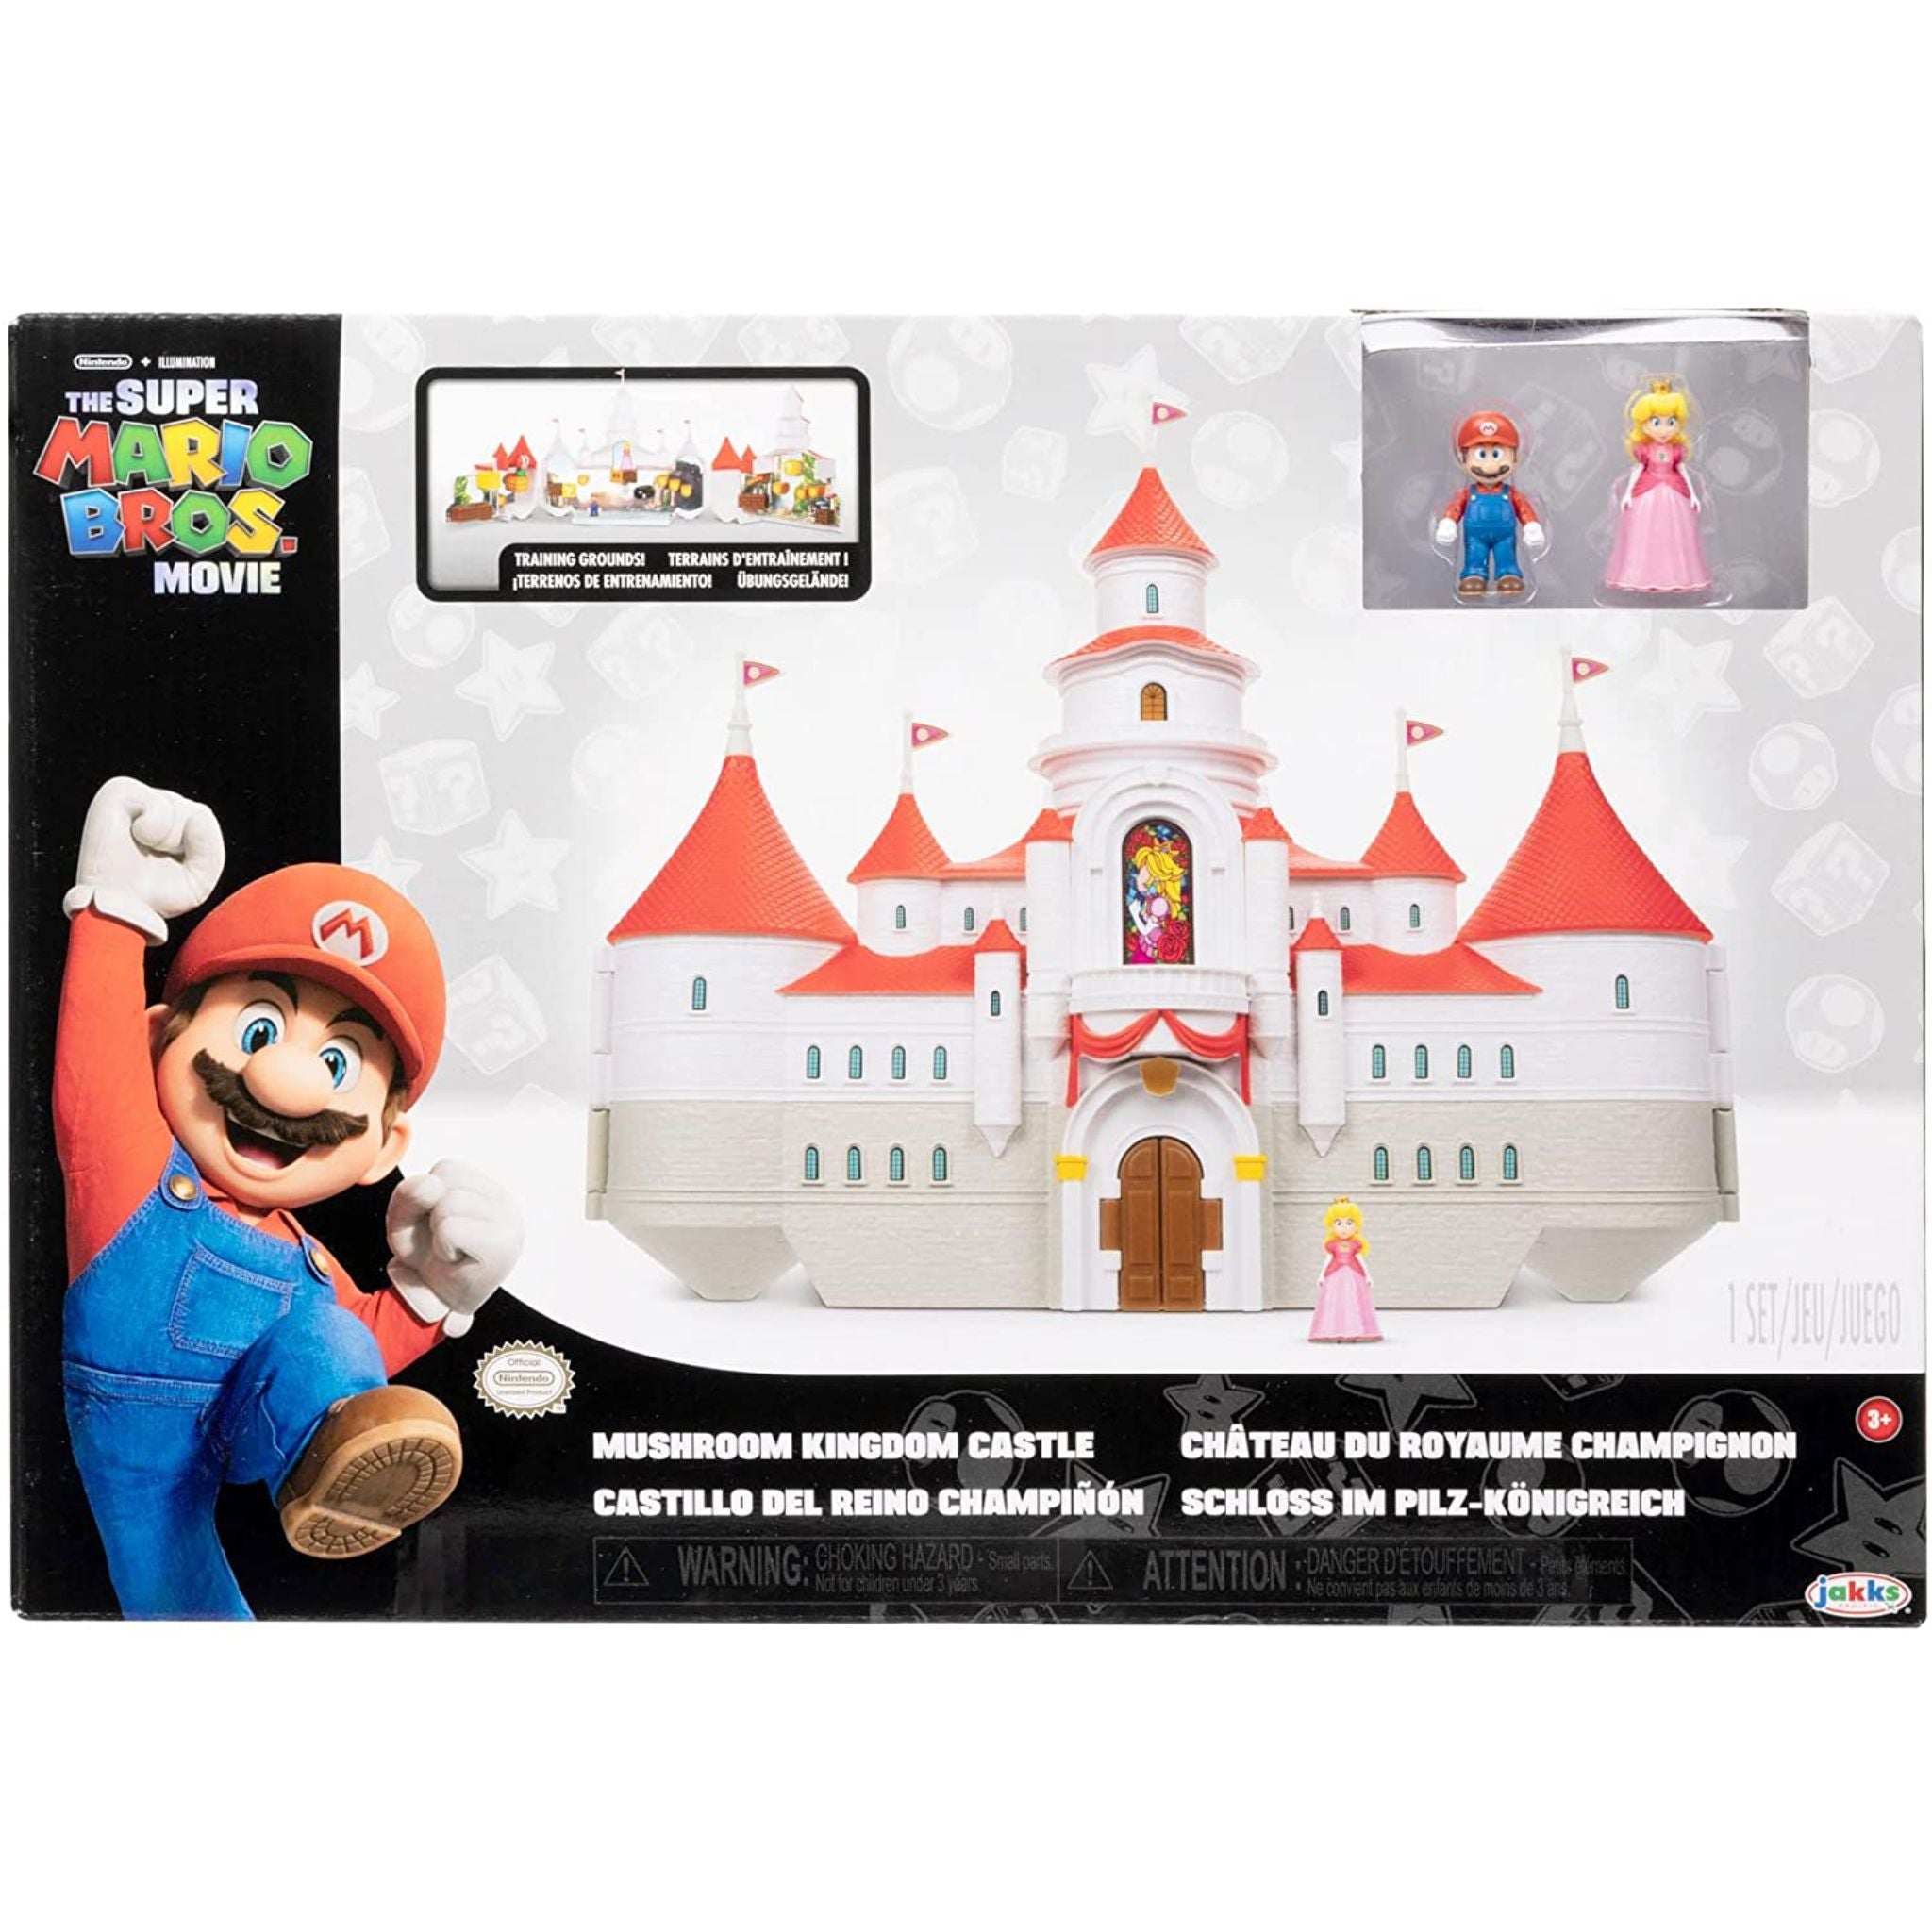 Super Mario Bros. Movie Mini World Mushroom Kingdom Castle (Includes Mario + Peach Figure) (US-417154)